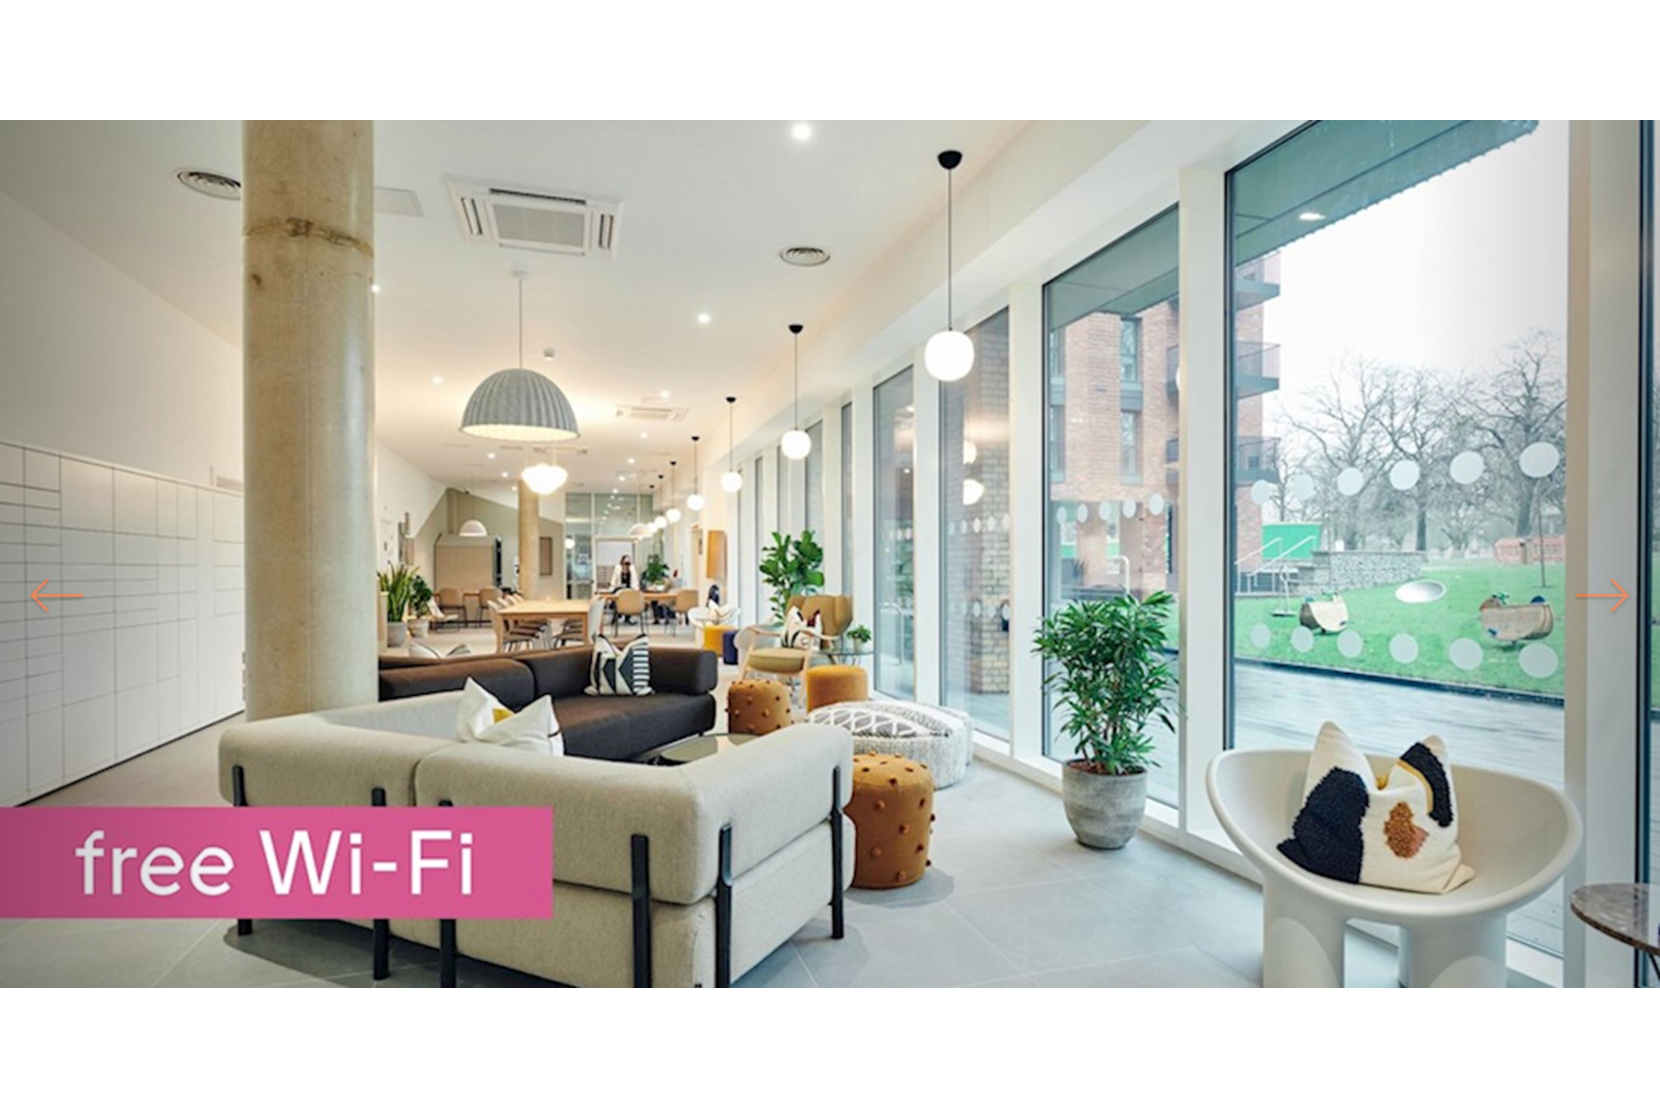 Apartment-APO-Group-Barking-Greater-London-interior-free-wifi